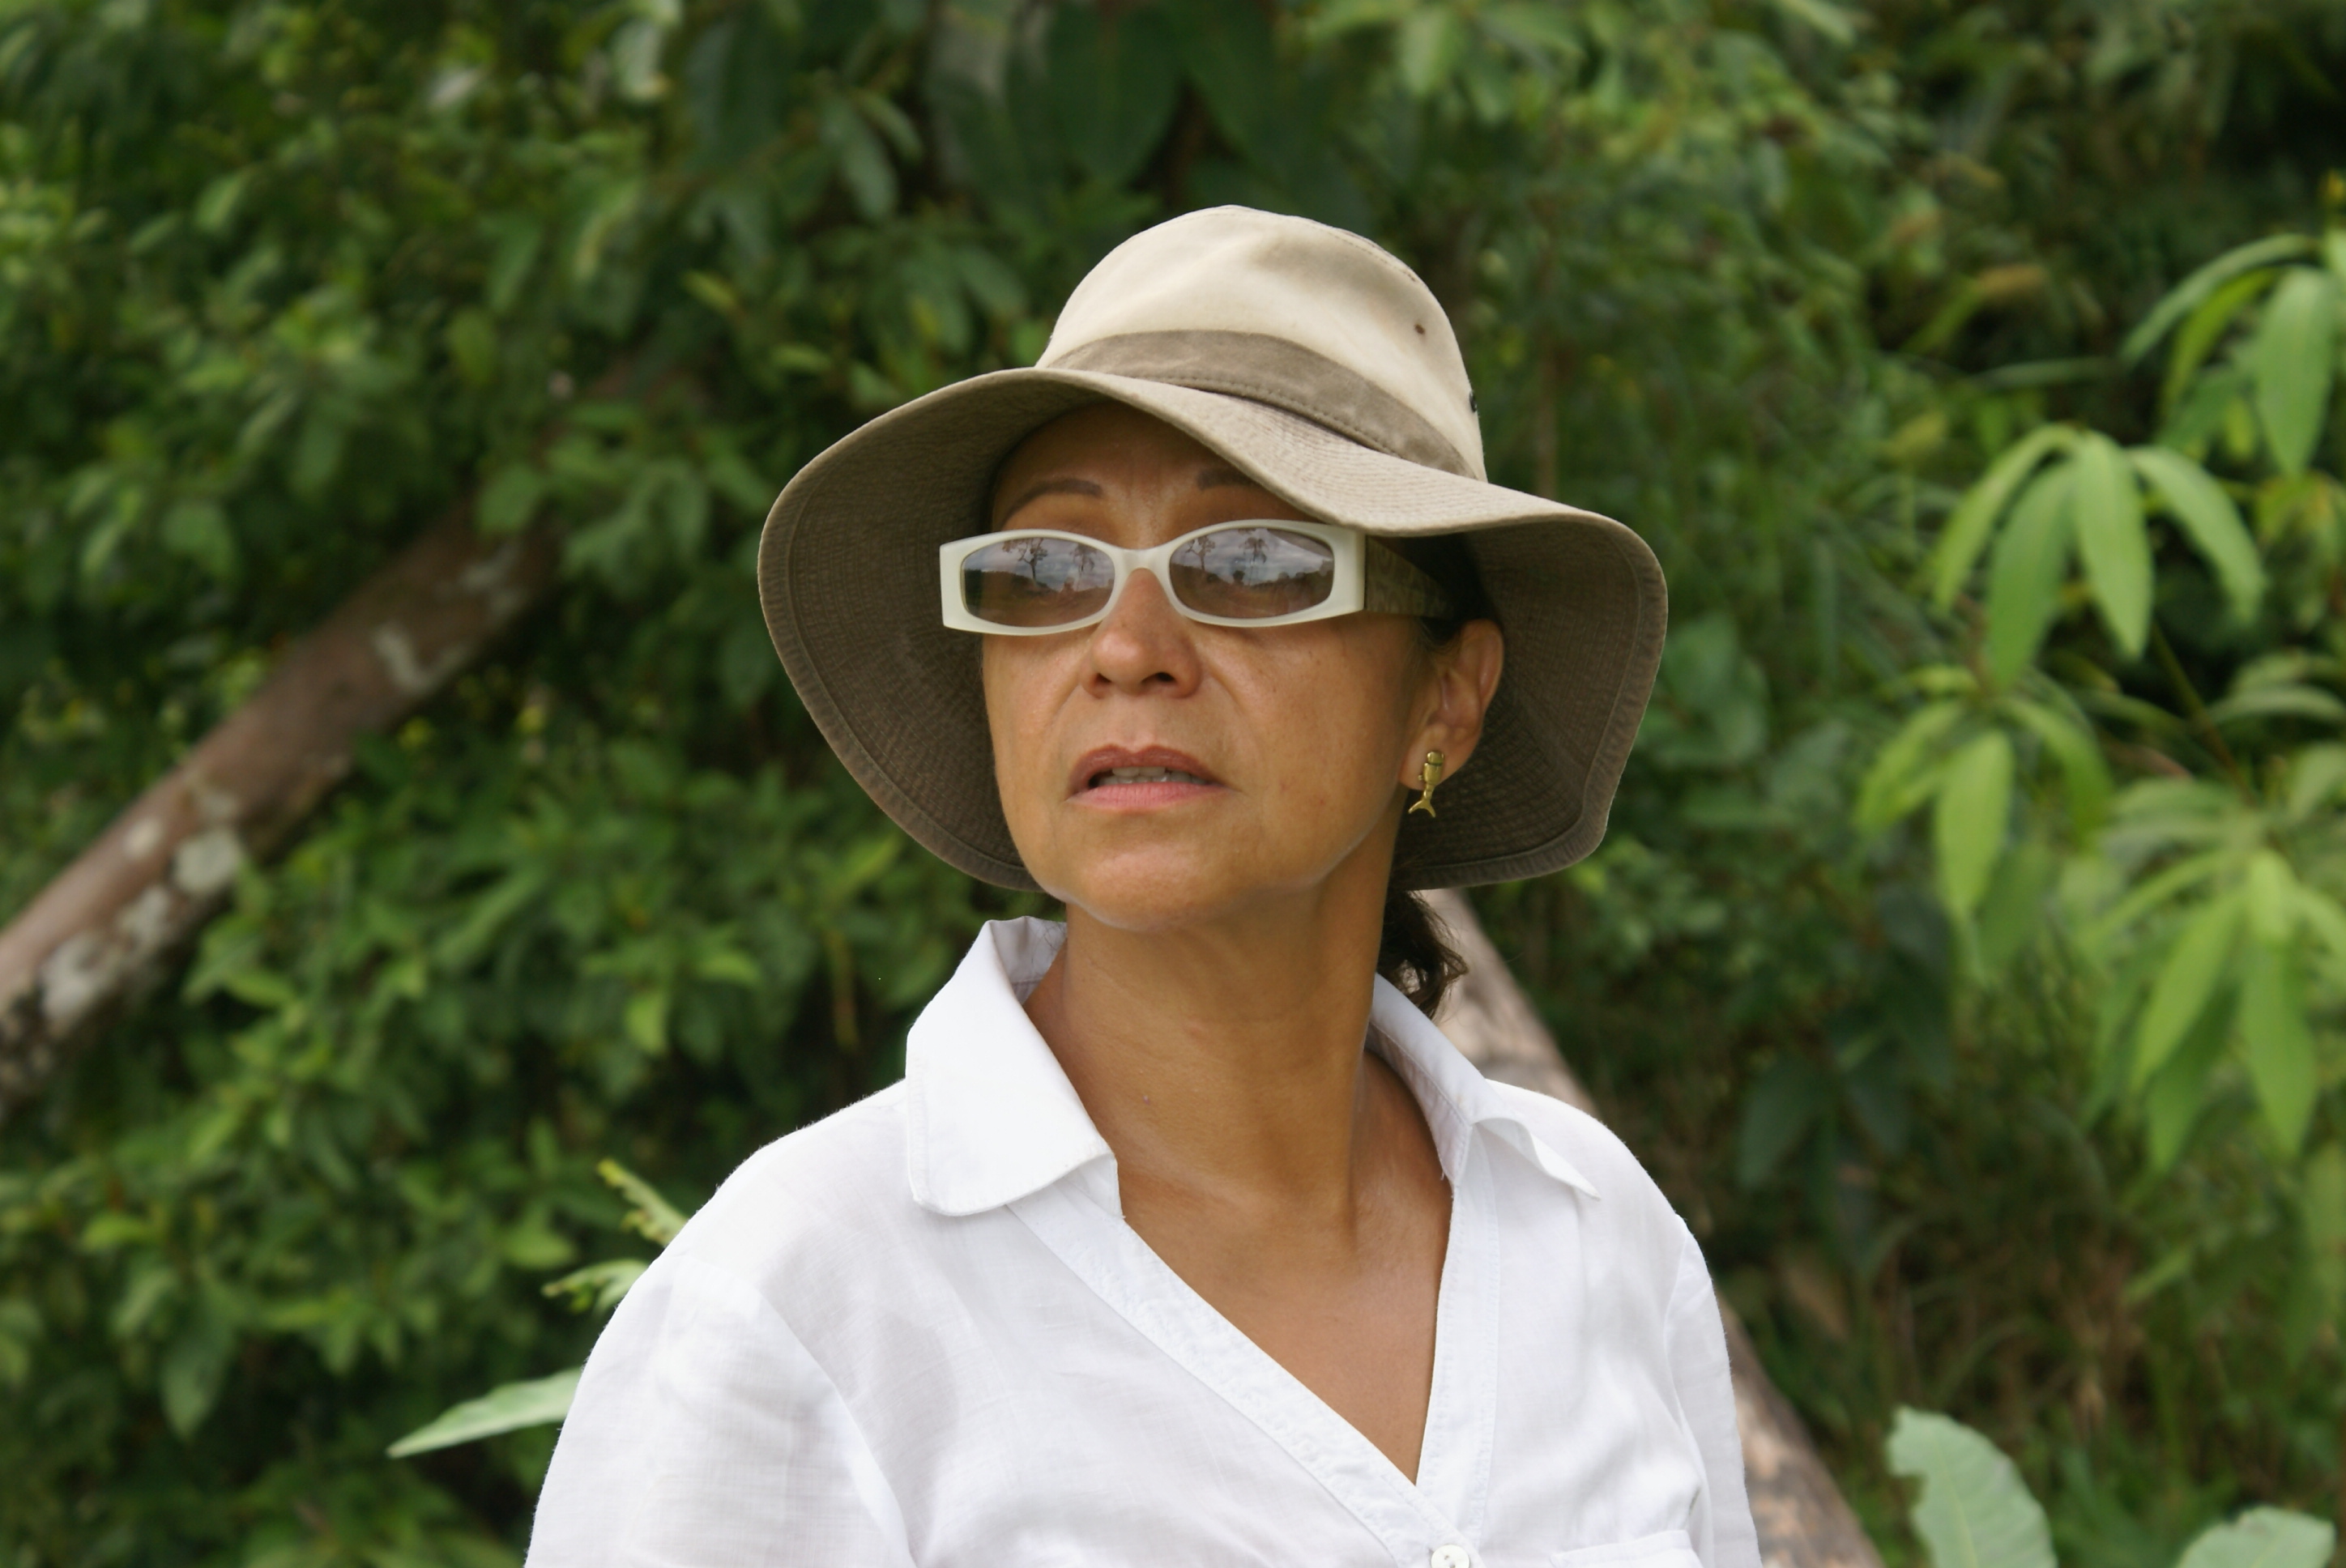 Margarita Cadenas Director - Producer and Writer